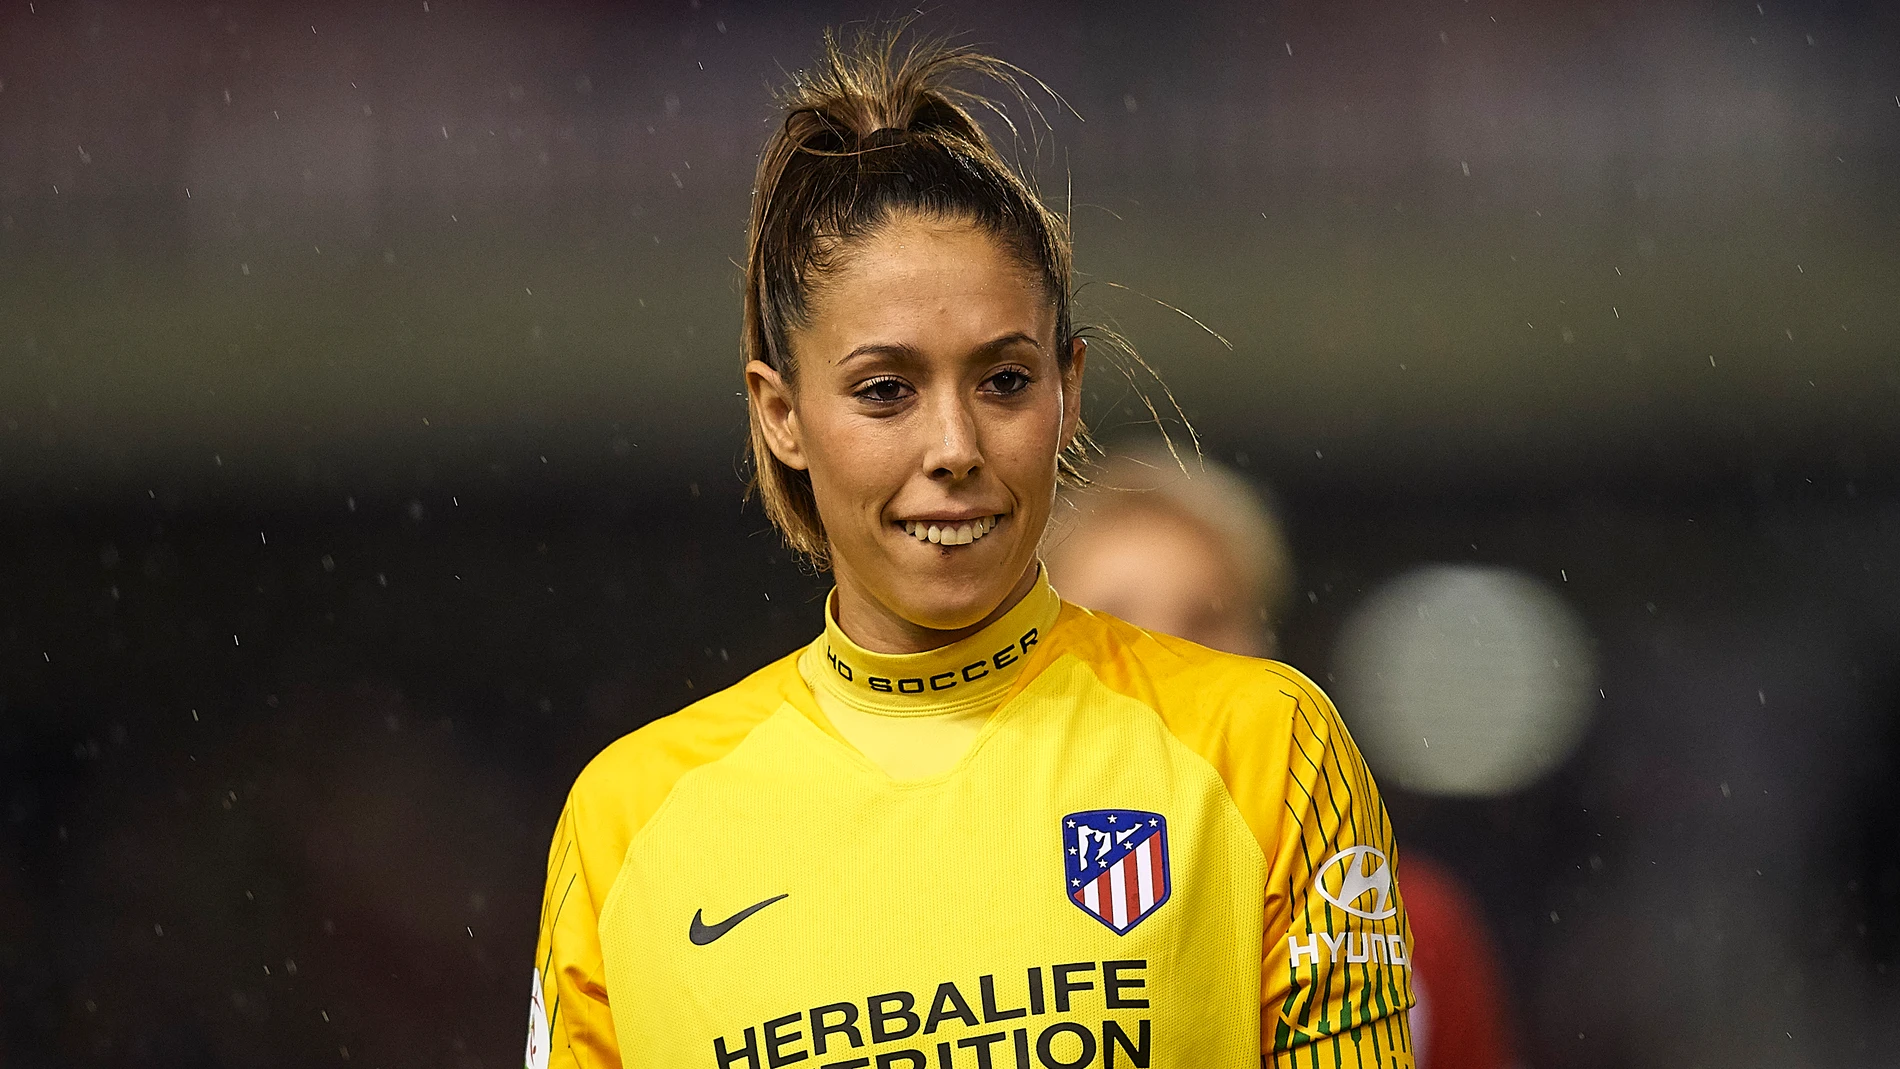 Lola Gallardo, portera de la Selección Española de Fútbol Femenino